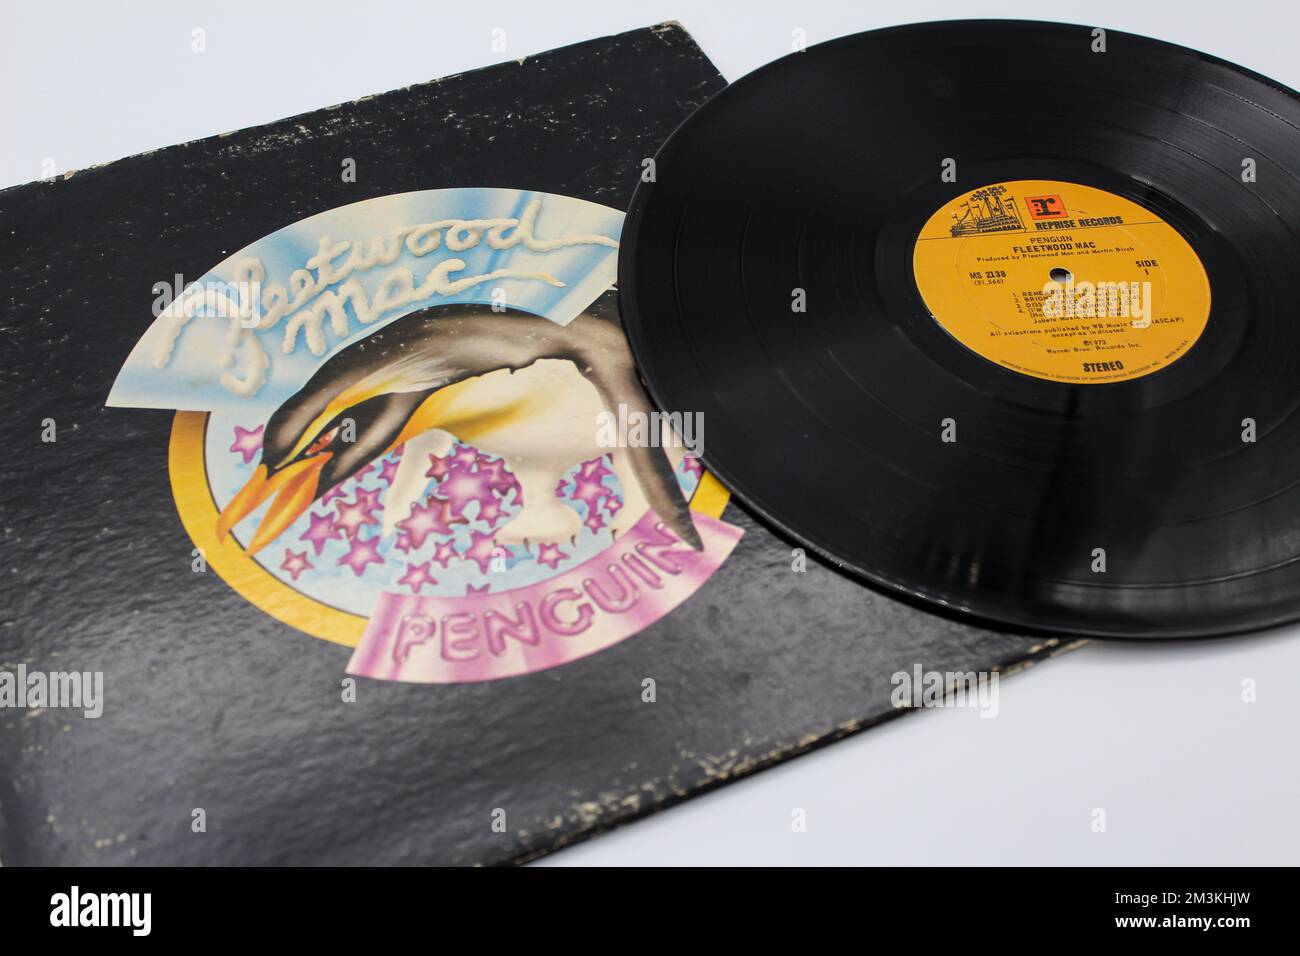 Rock and soft rock band, Fleetwood Mac music album on vinyl record LP disc. Titled: Penguin album cover on vinyl record LP Stock Photo